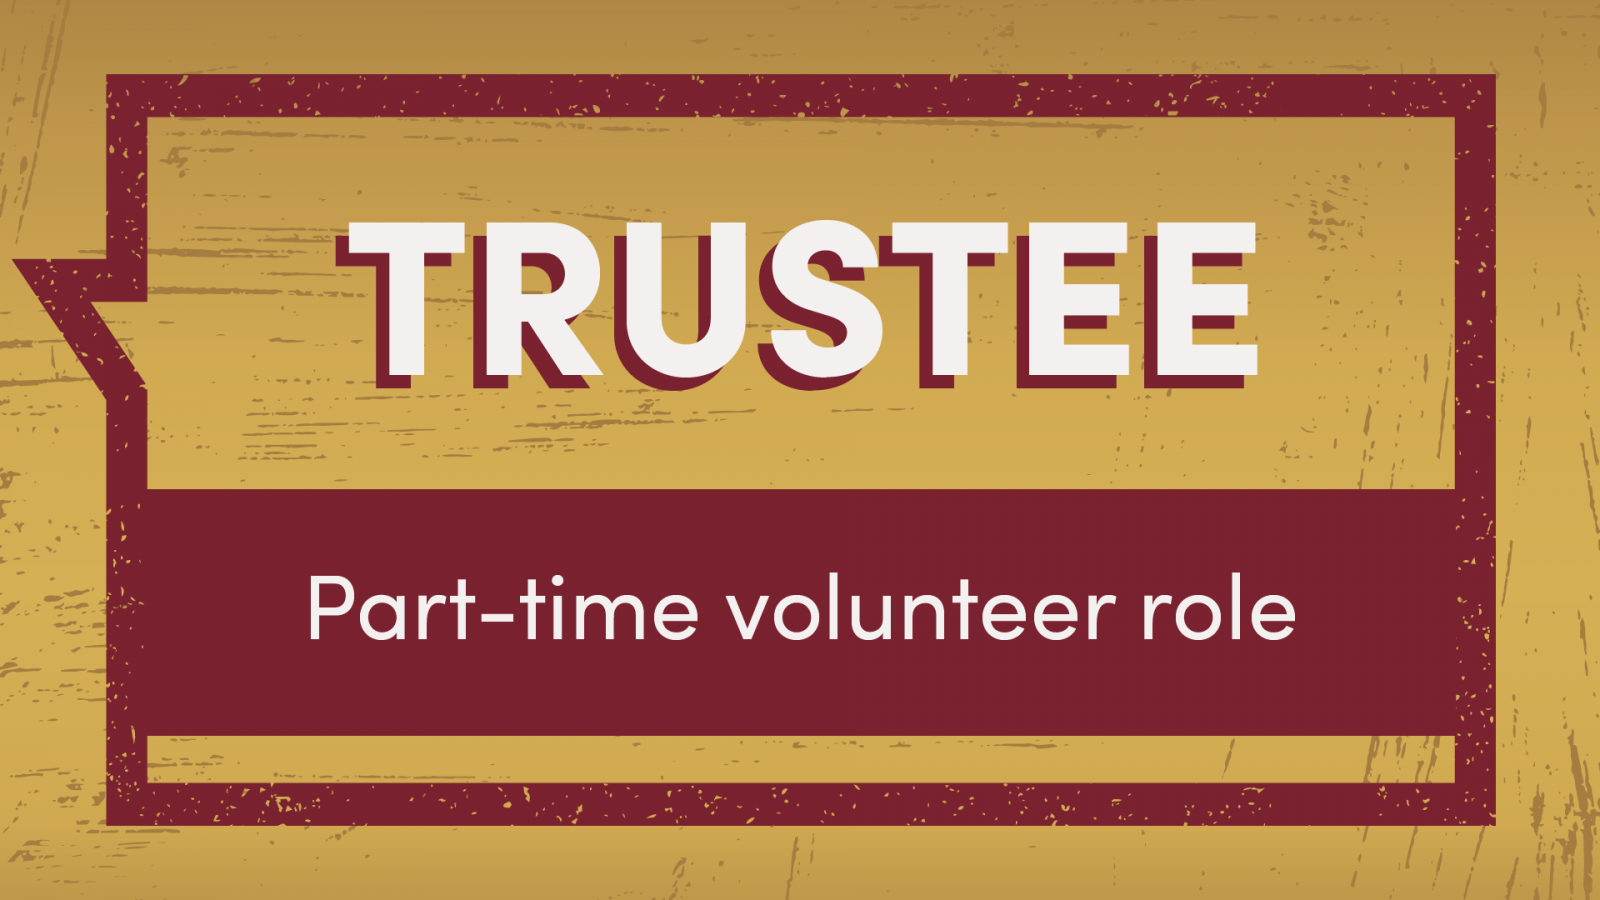 Open the Trustee role profile PDF